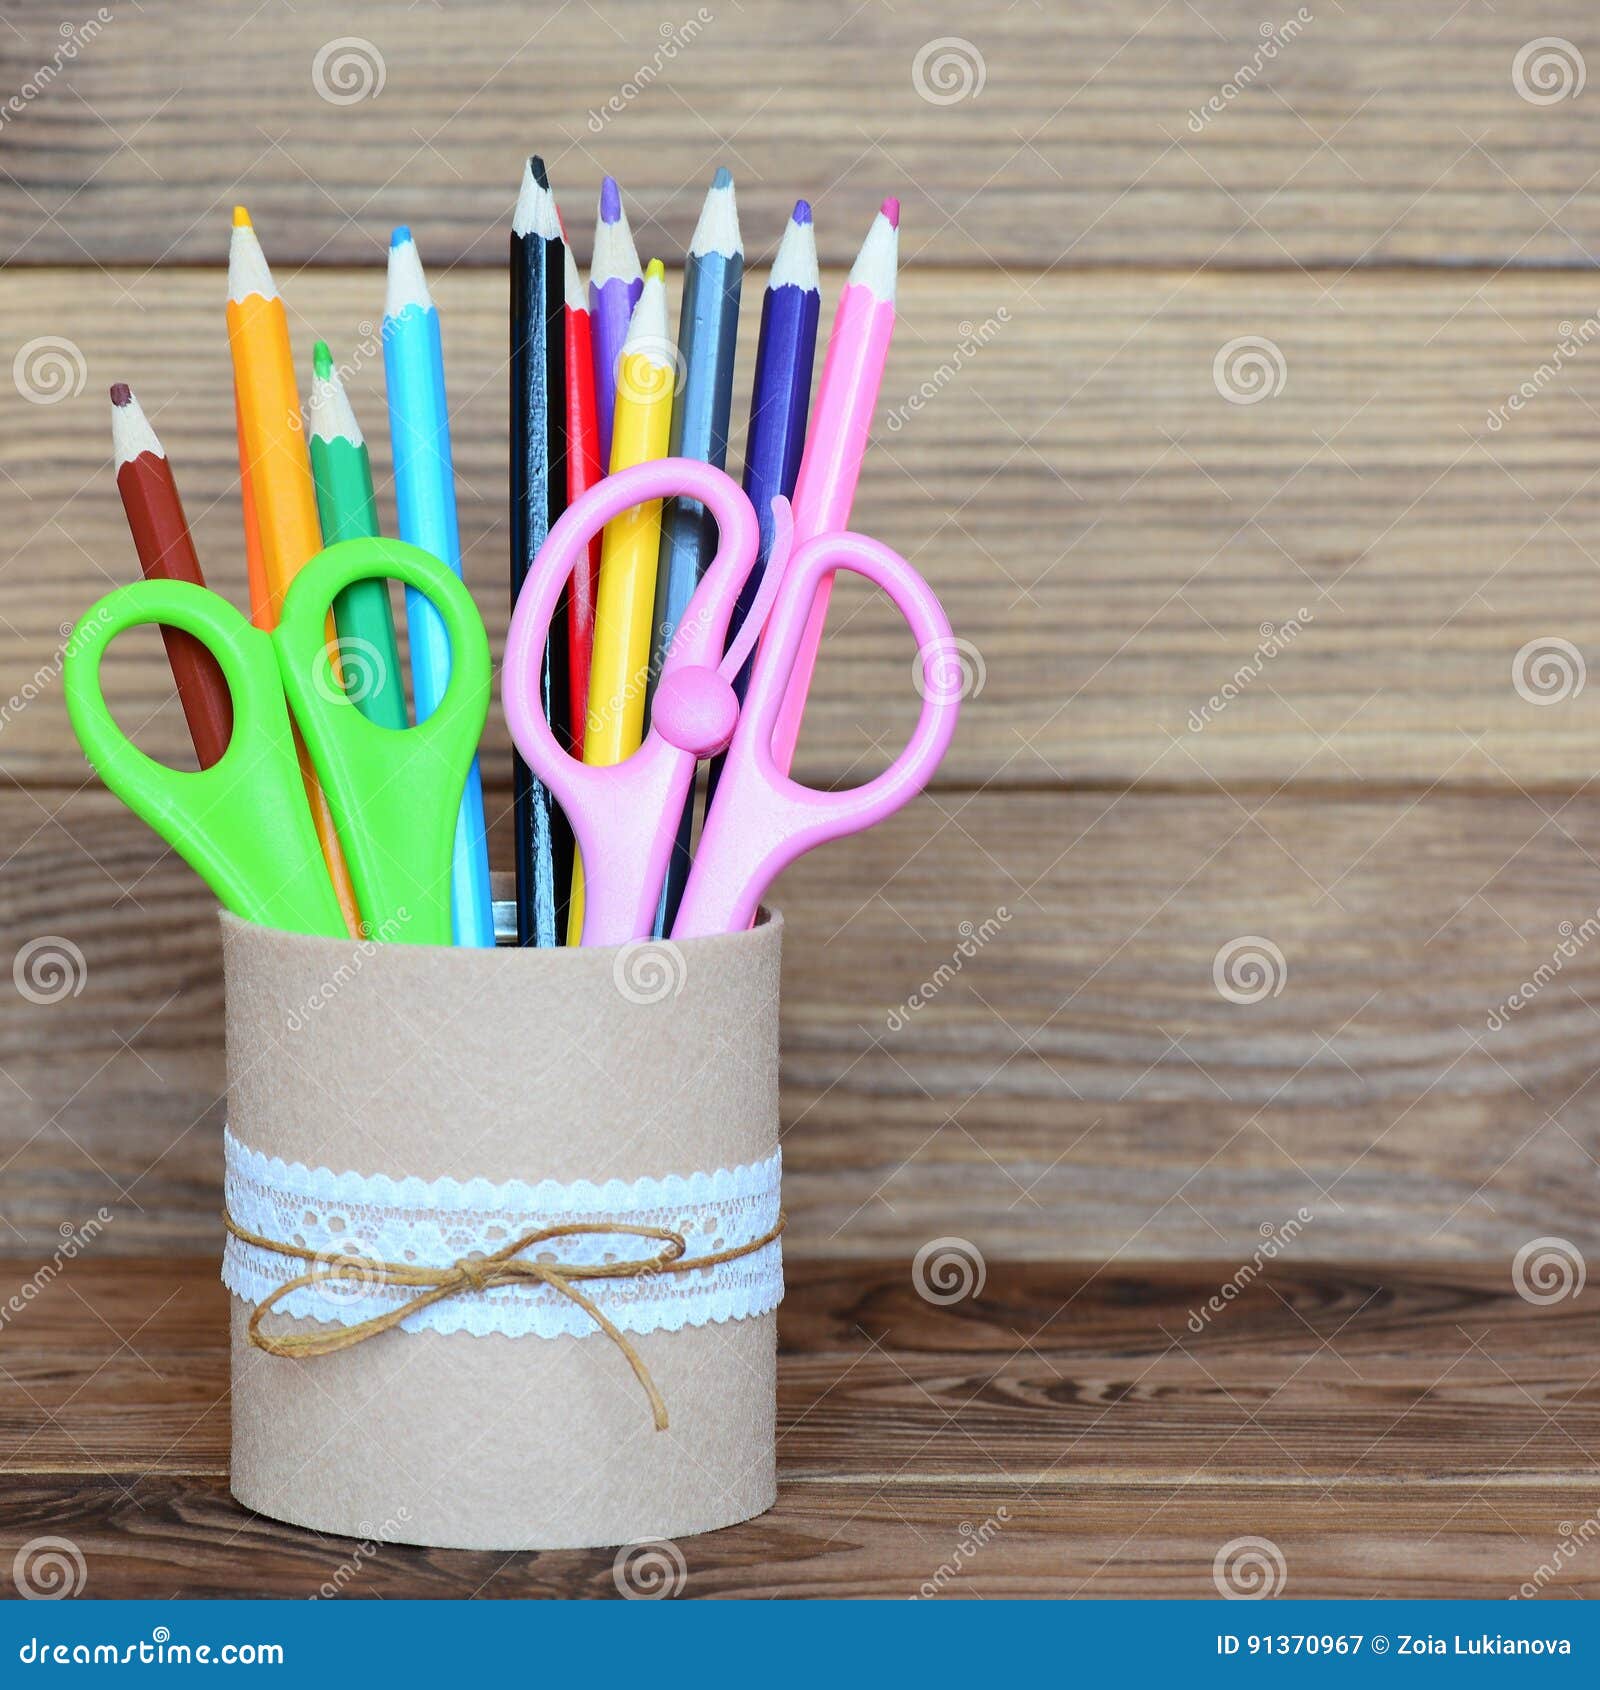 Easy DIY High End Colored Pencil Storage Box 